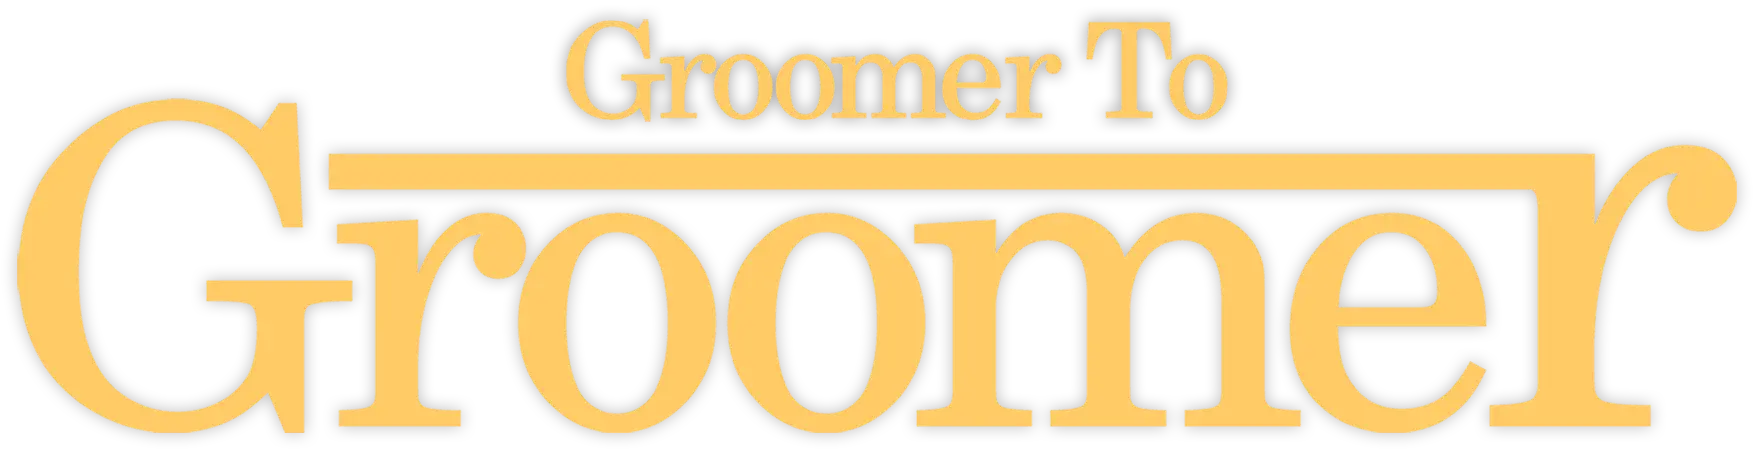 Groomer to Groomer logo